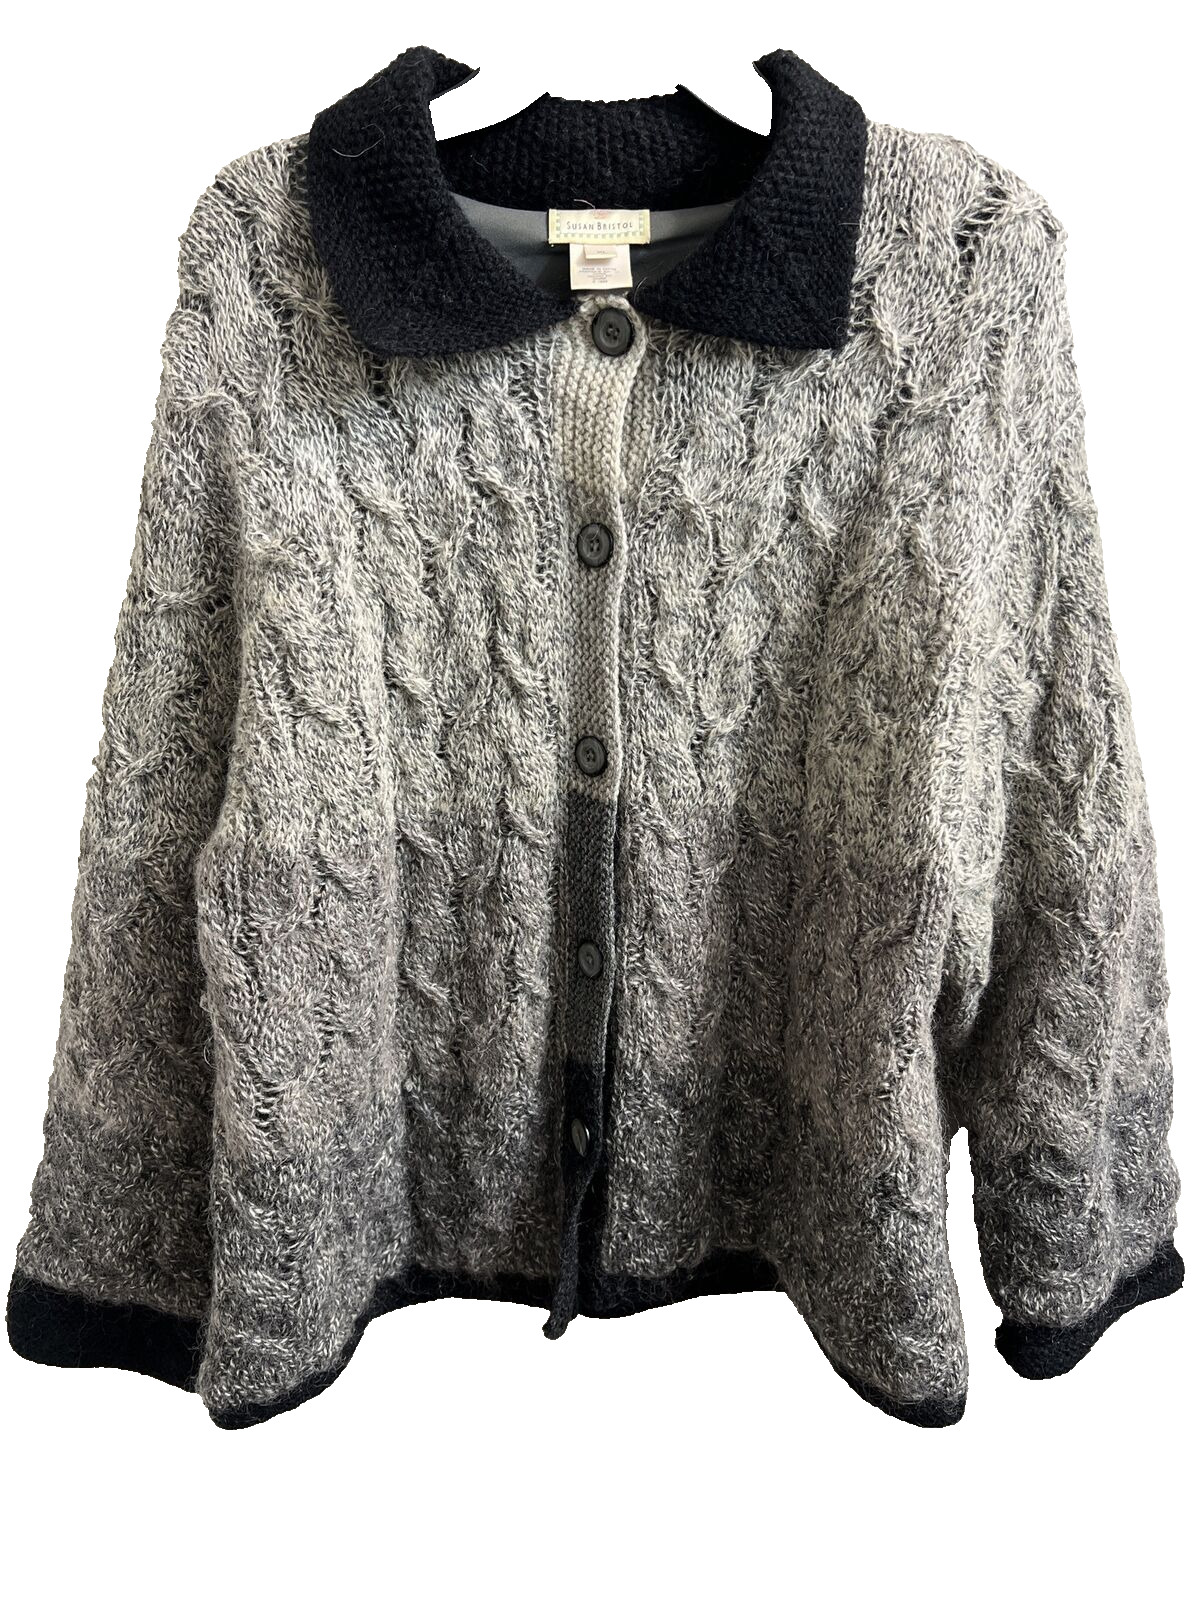 Susan Bristol Women\'s XL Coat Hand Knit Mohair Sweater lined Wool Ombre